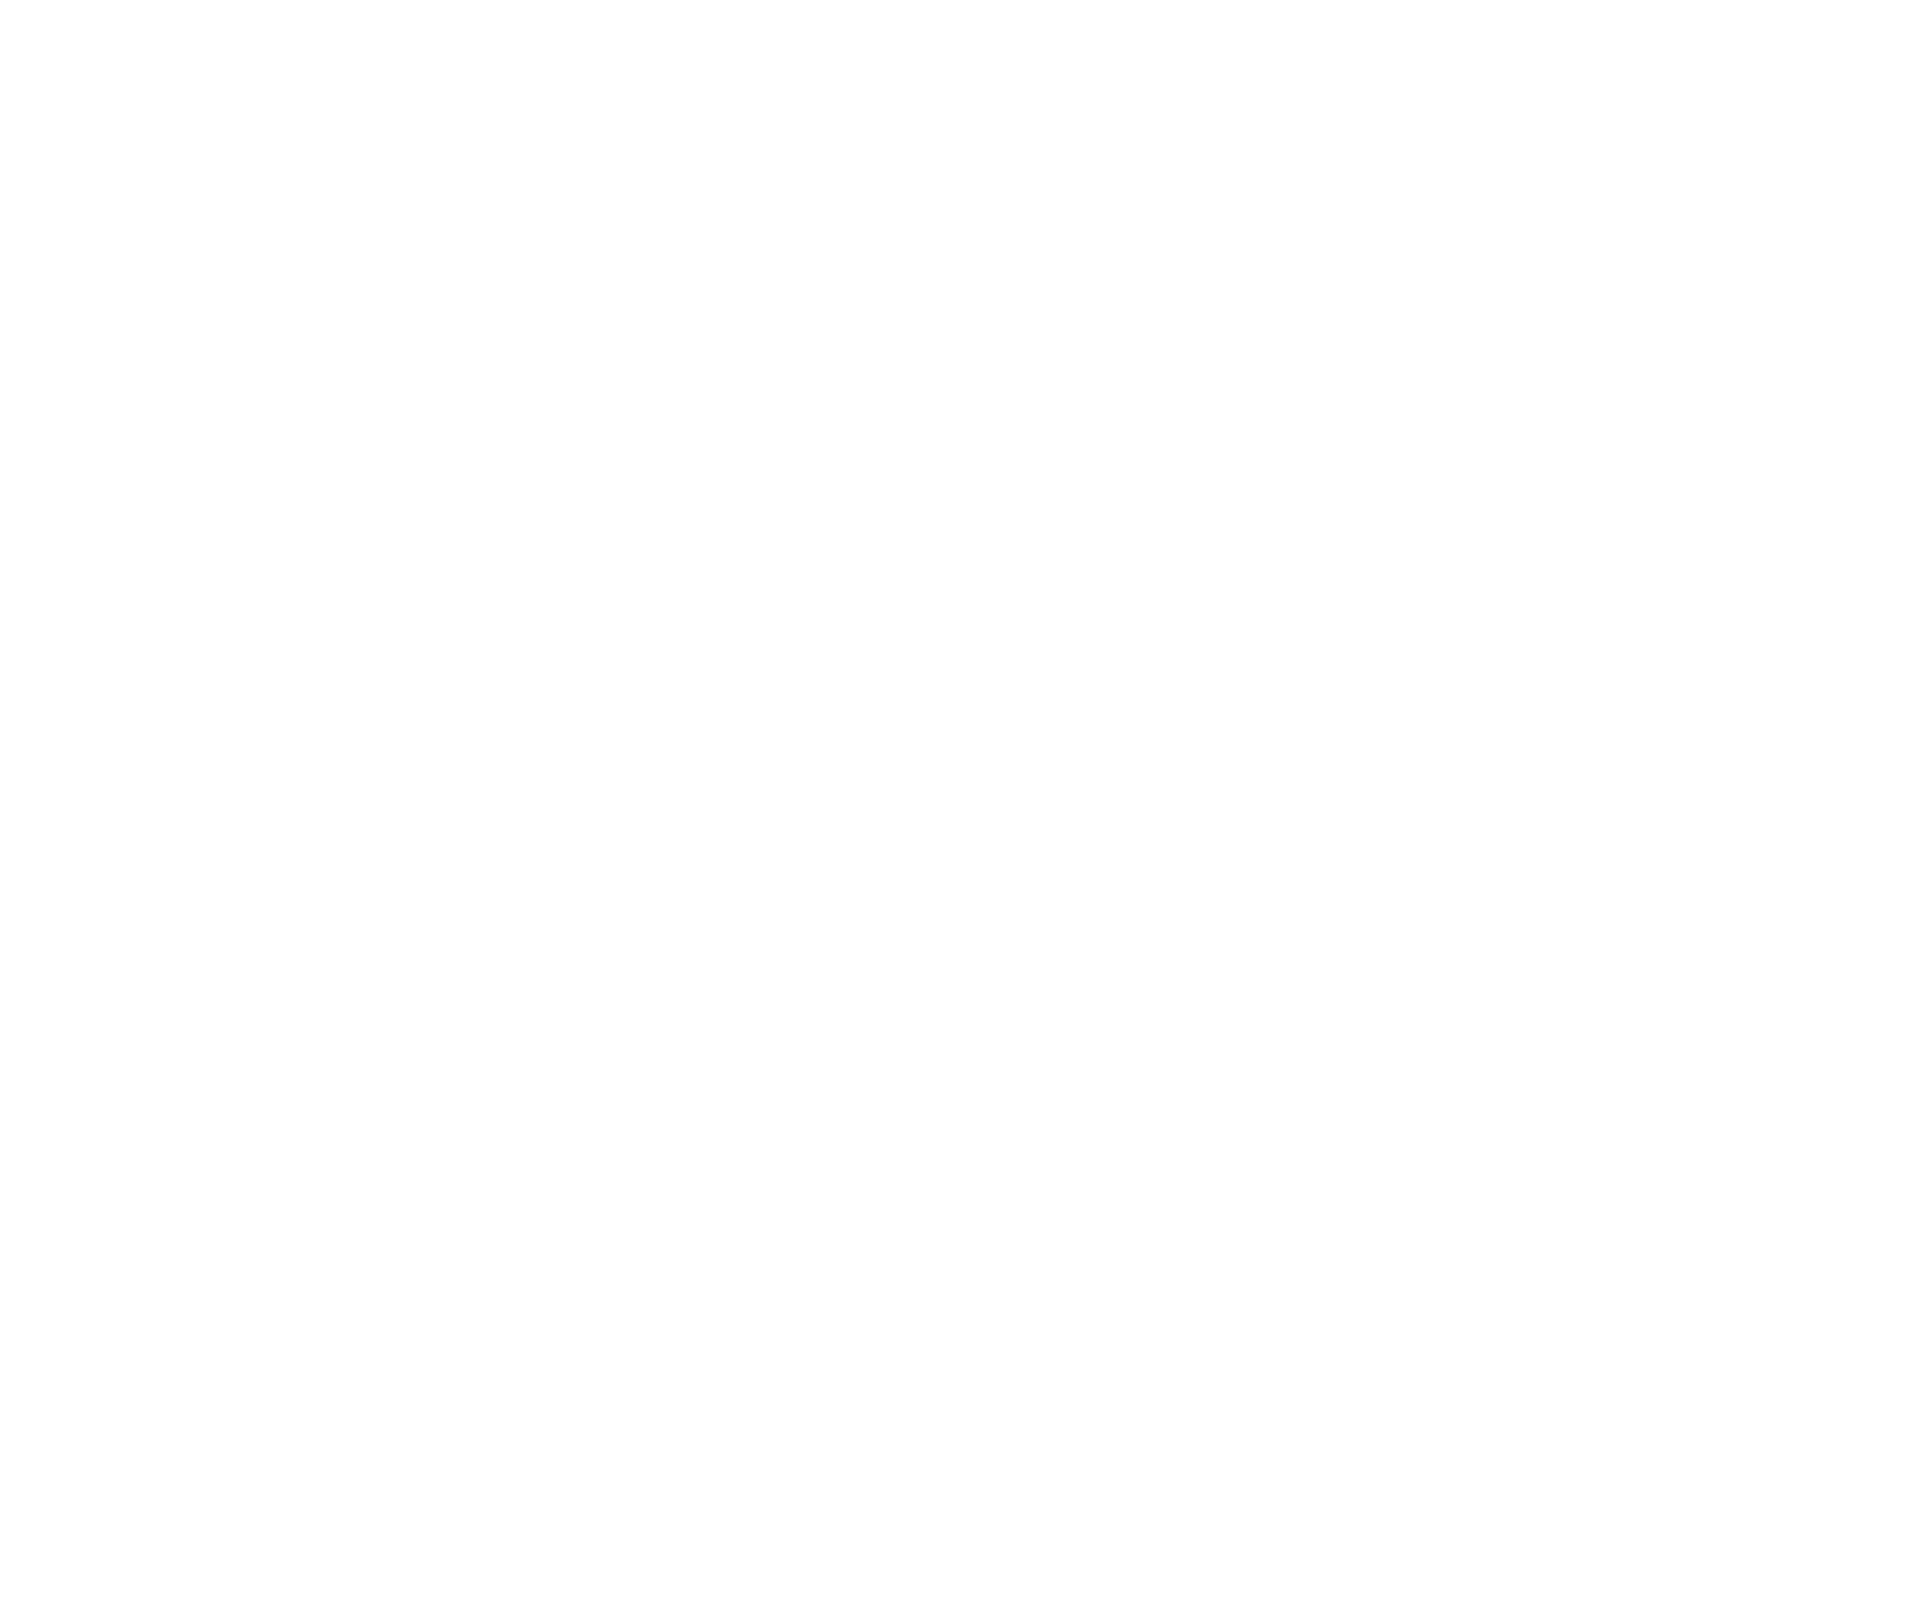 Short-white-curve